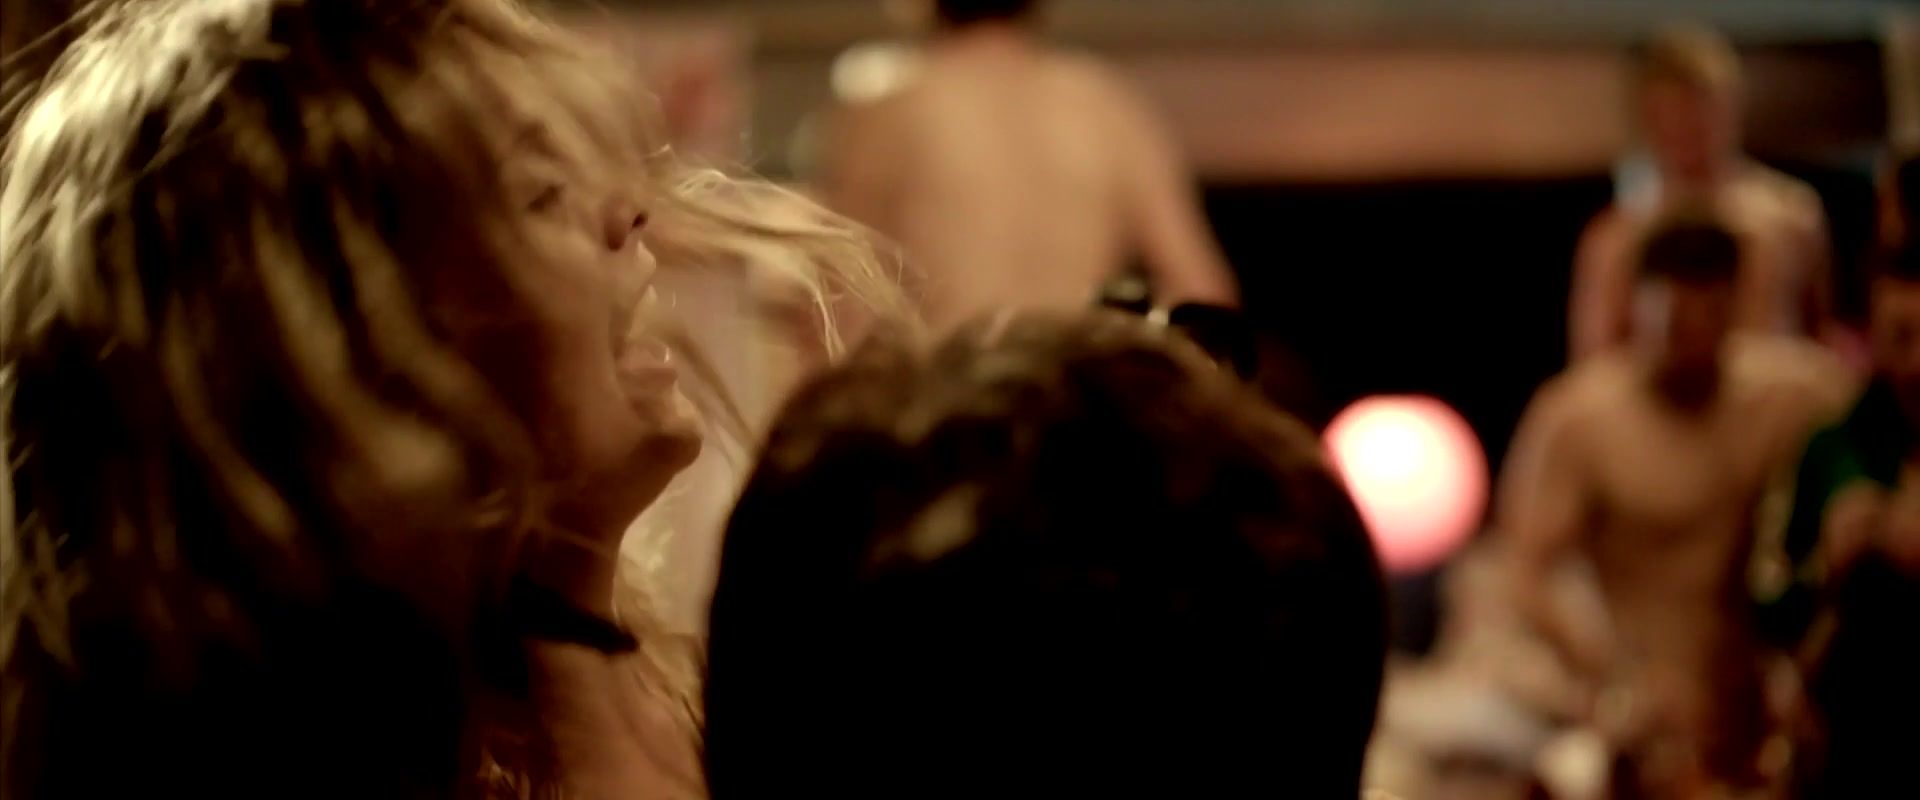 Black Dick Celebs Naked Scenes with Hot Rose McIver | The movie "Blinder" | released in 2013 Assgape